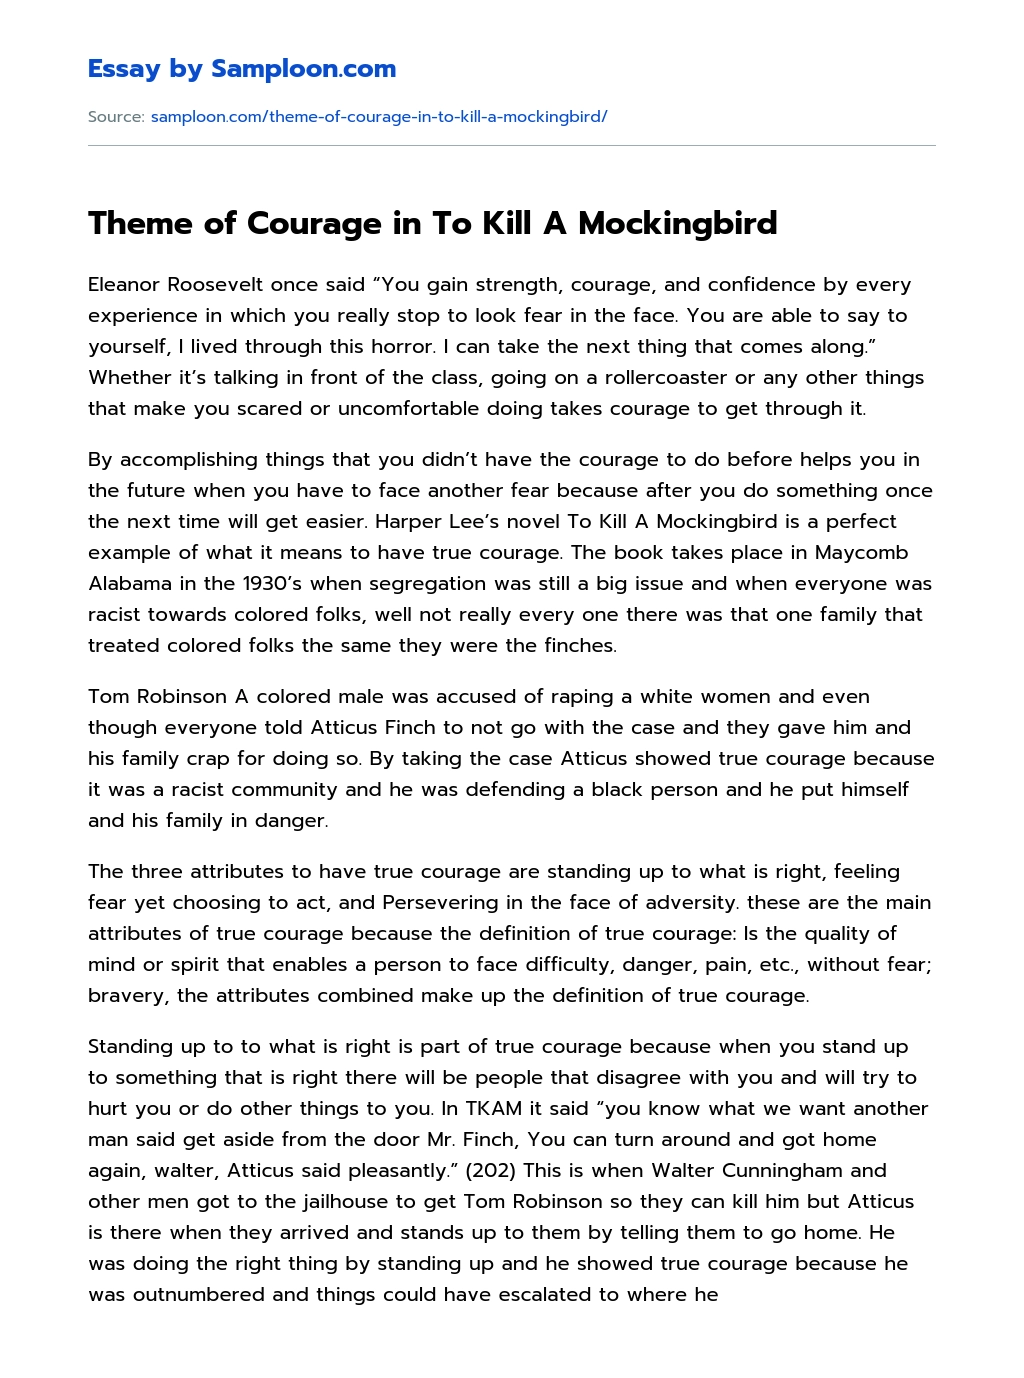 Theme of Courage in To Kill A Mockingbird Argumentative Essay essay